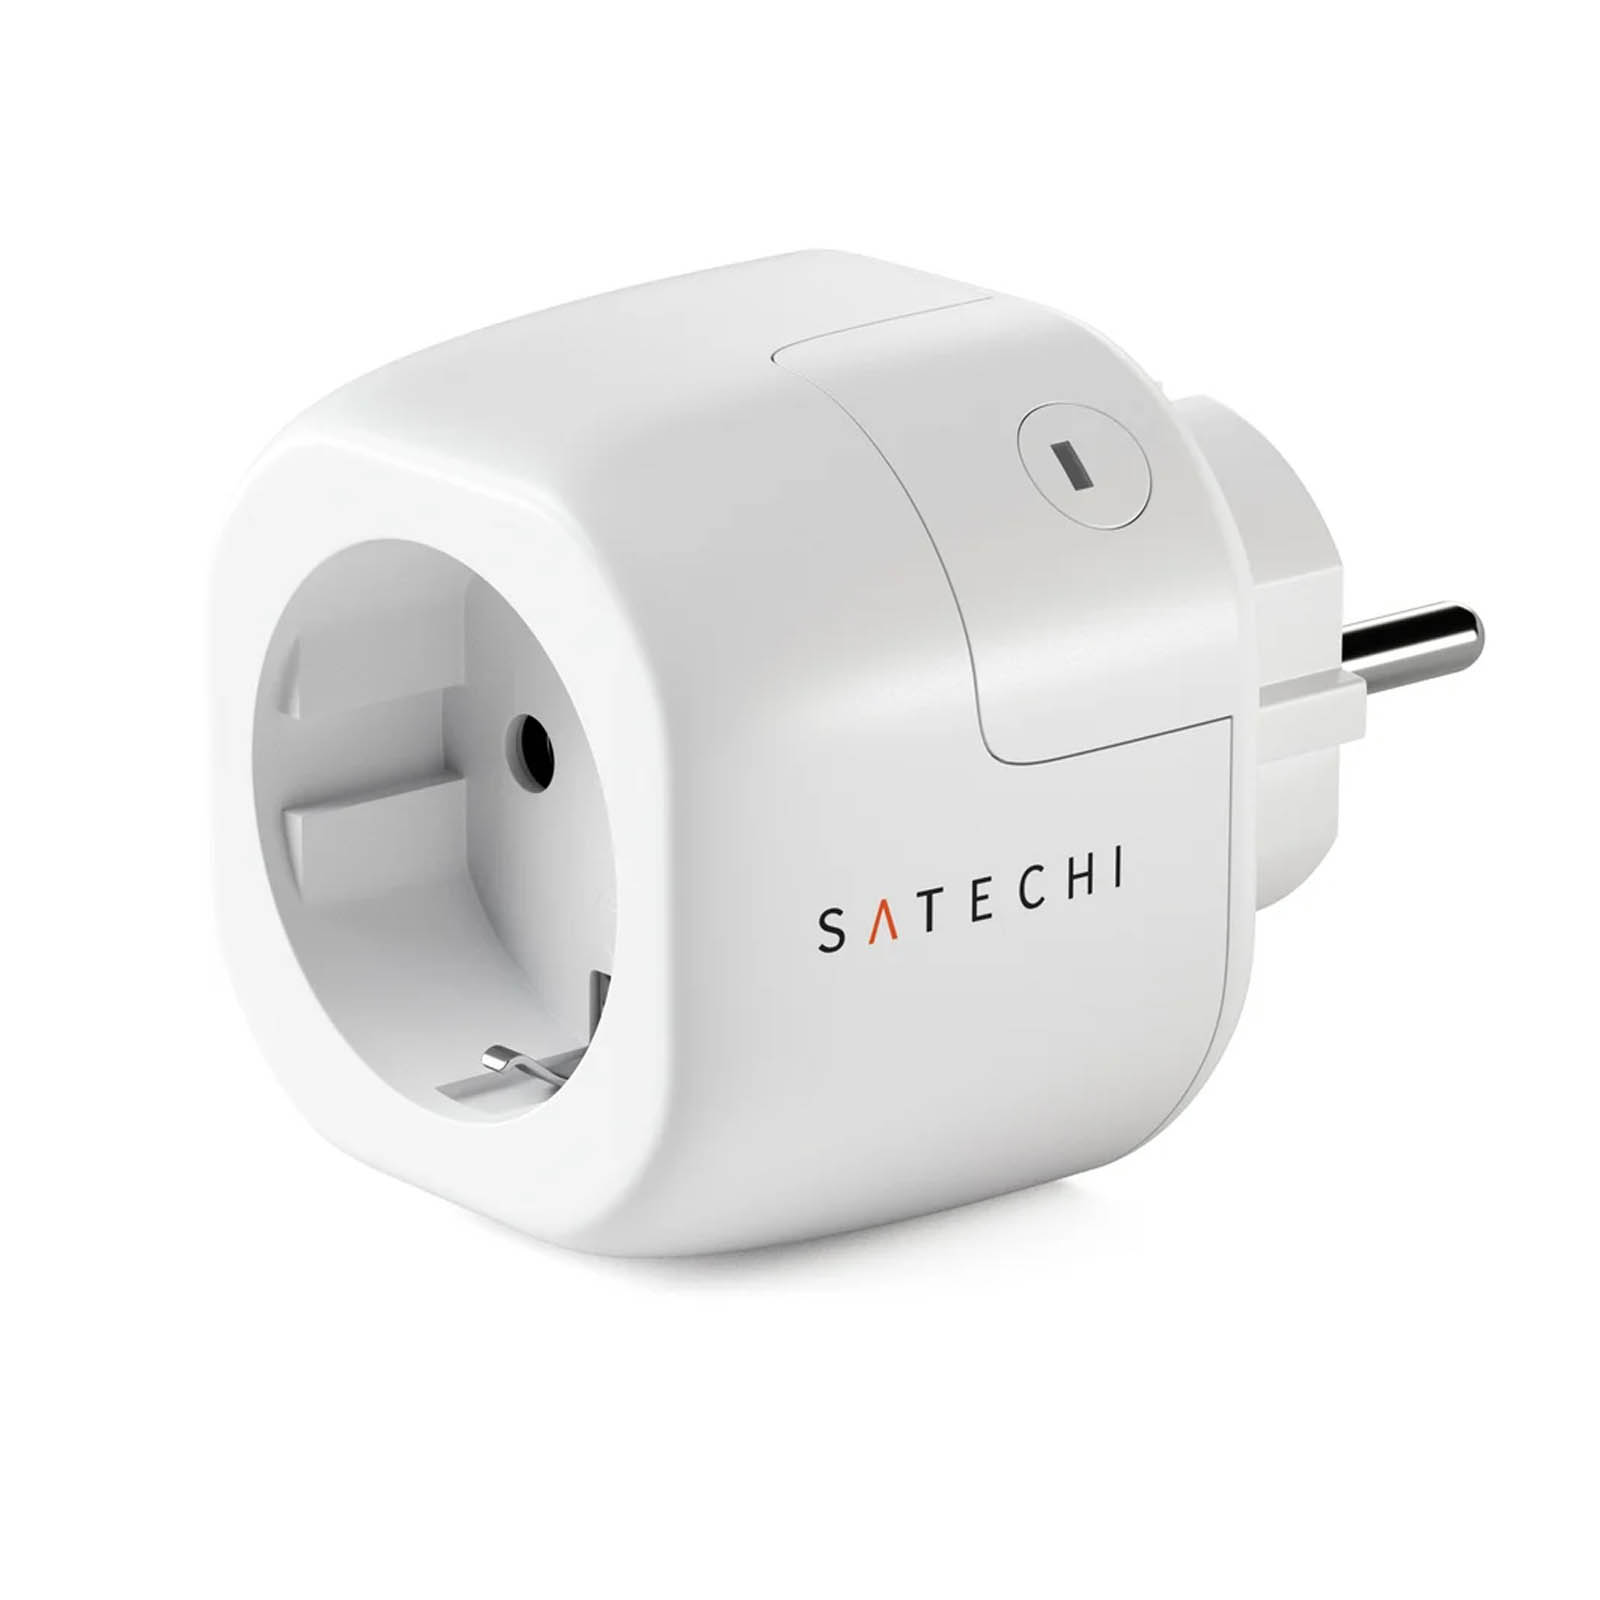 SATECHI ST-HK10AW-EU Smarte Steckdose Universal, Weiß